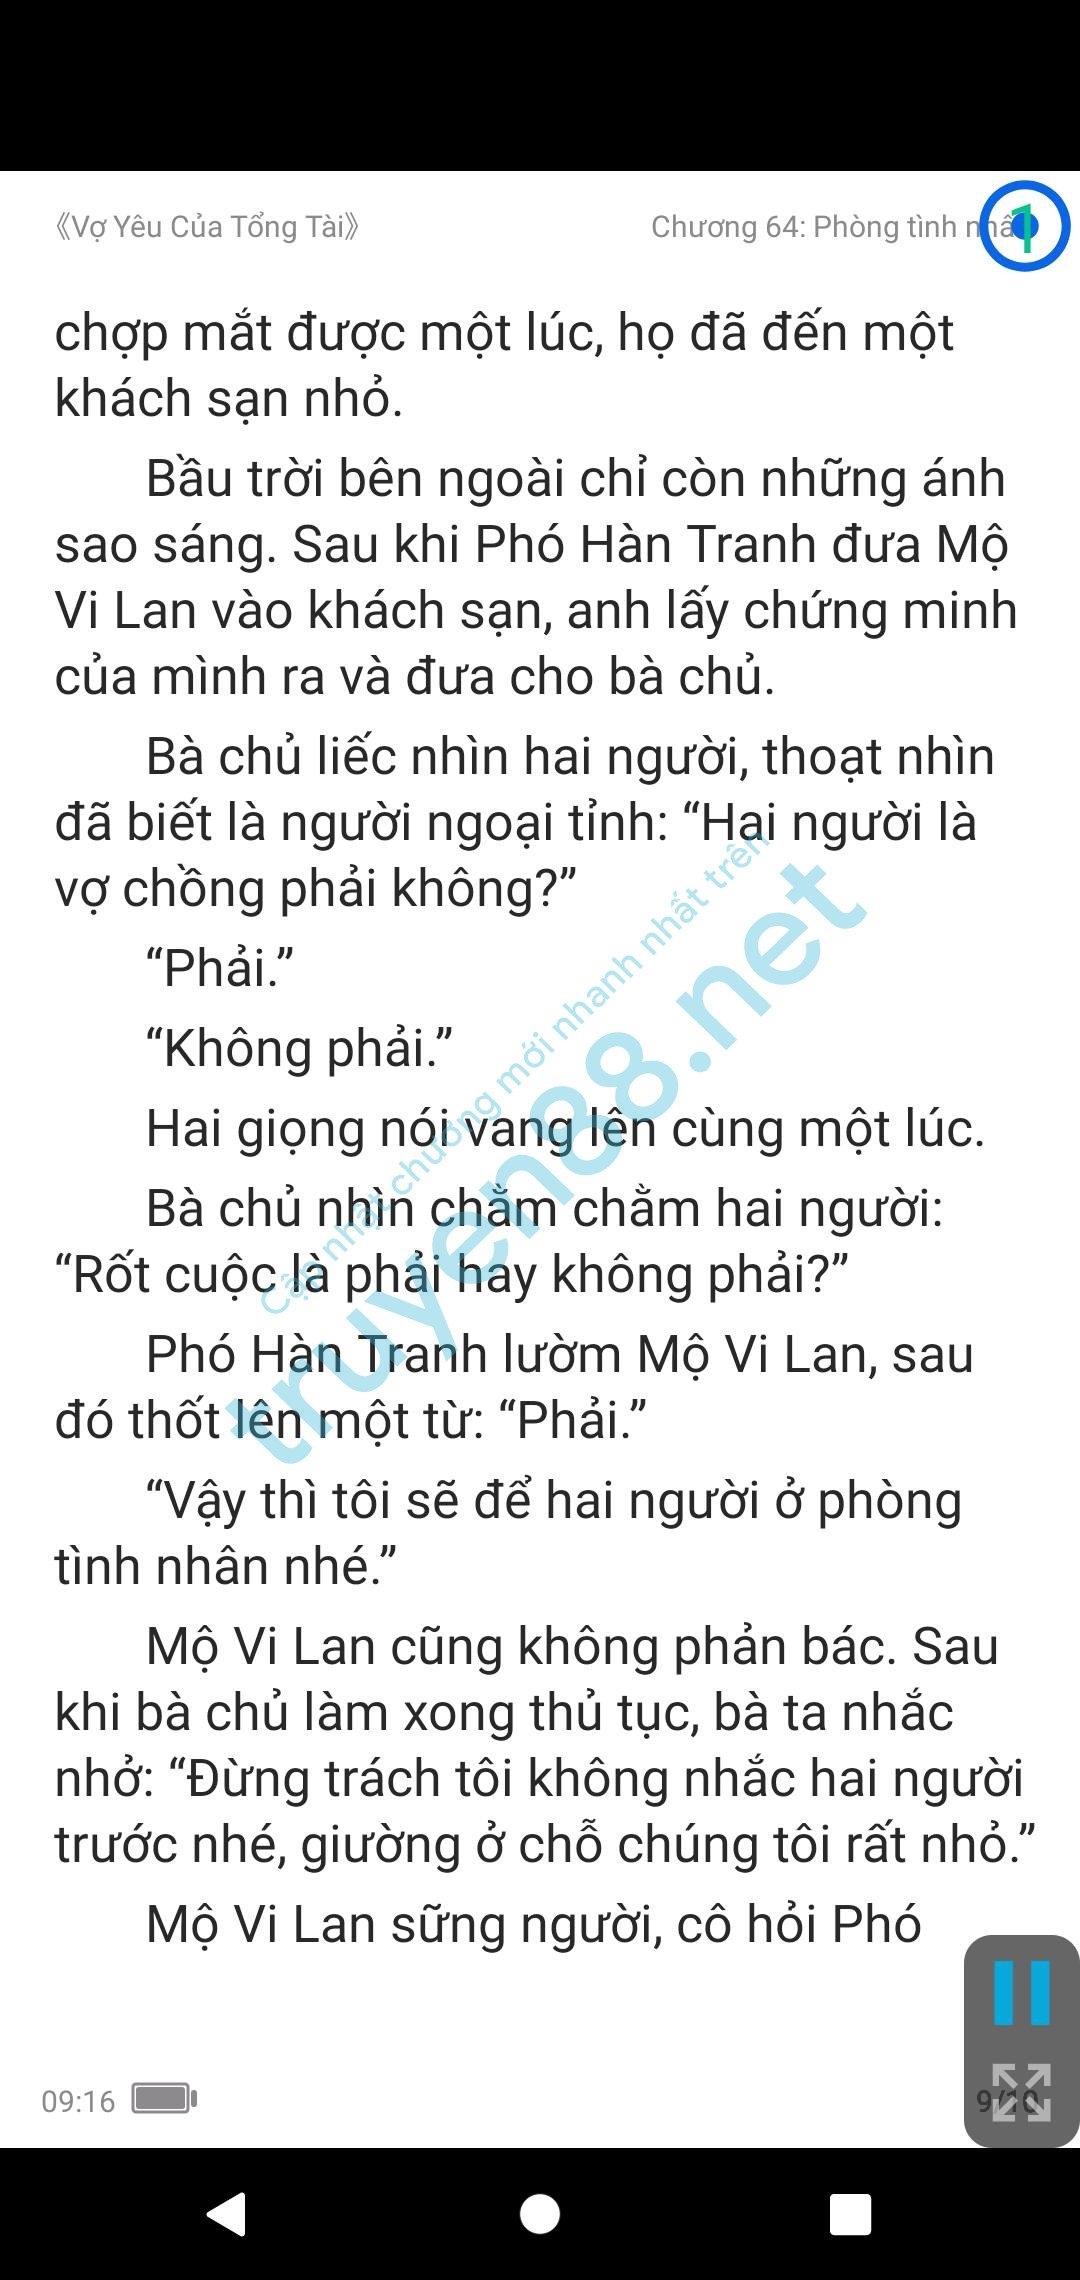 vo-yeu-cua-tong-tai-mo-vi-lan--pho-han-tranh-64-1